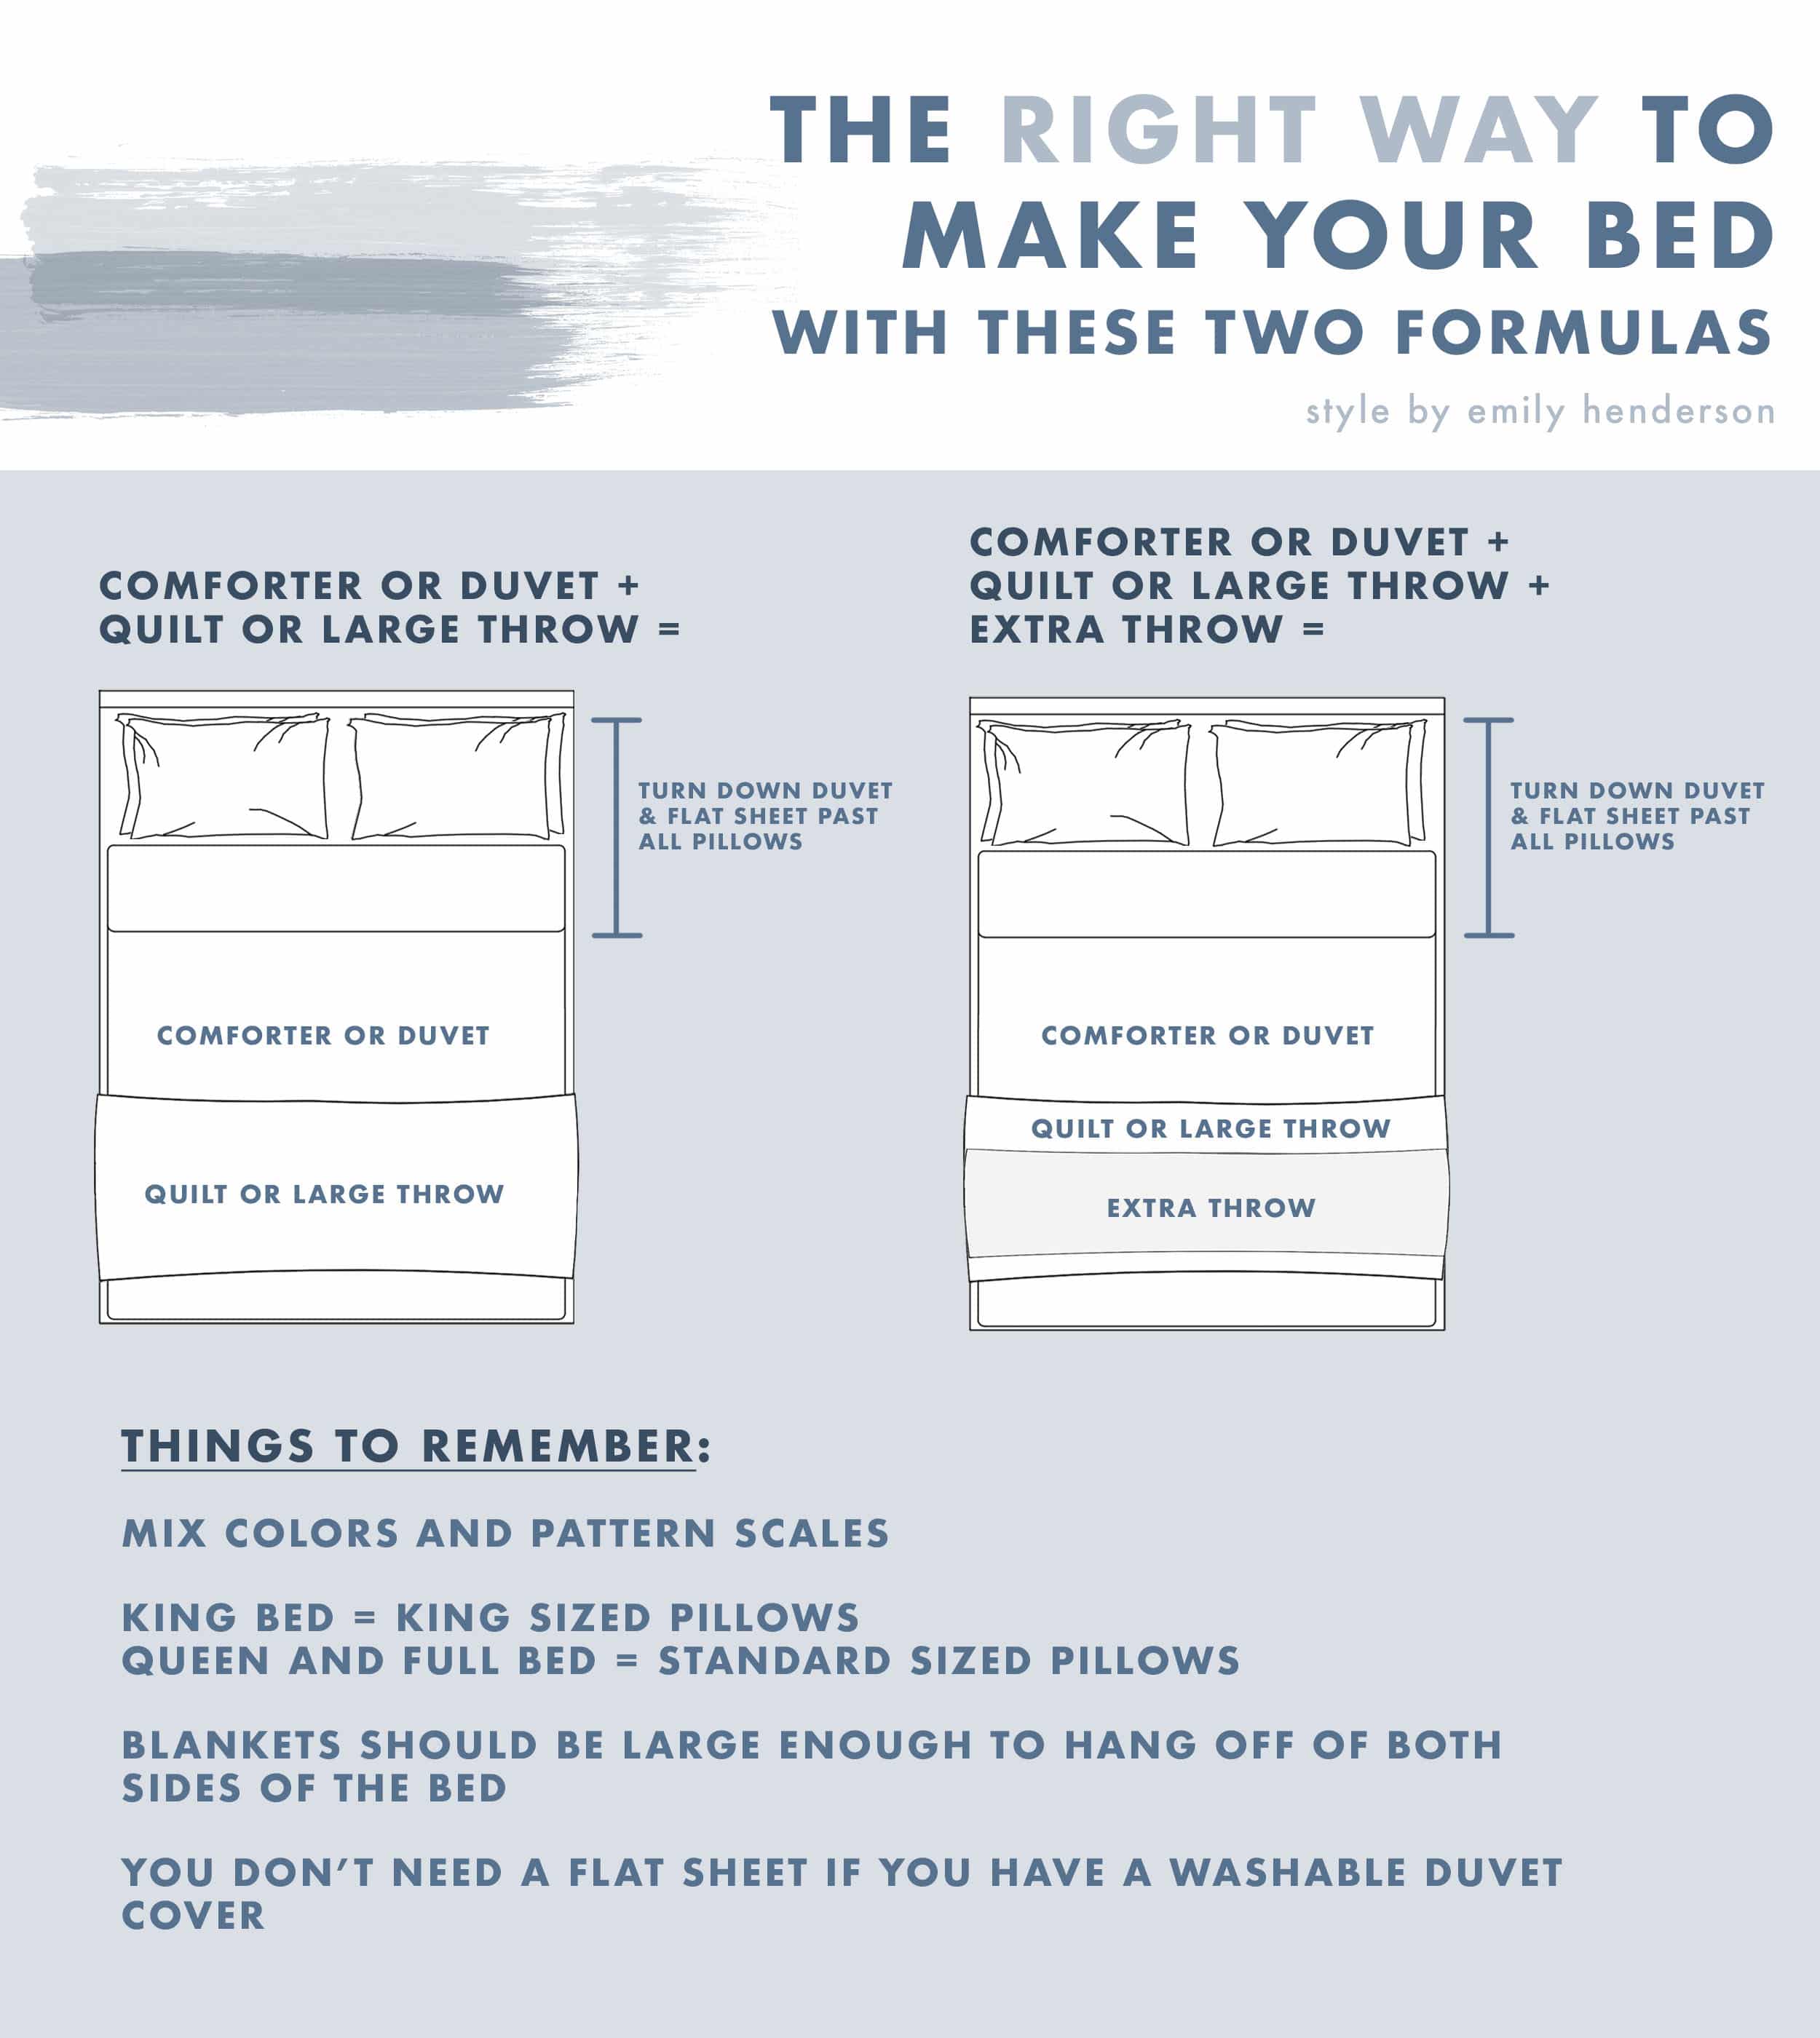 Emily Henderson Cara Membuat Aturan Tempat Tidur Tempat Tidur